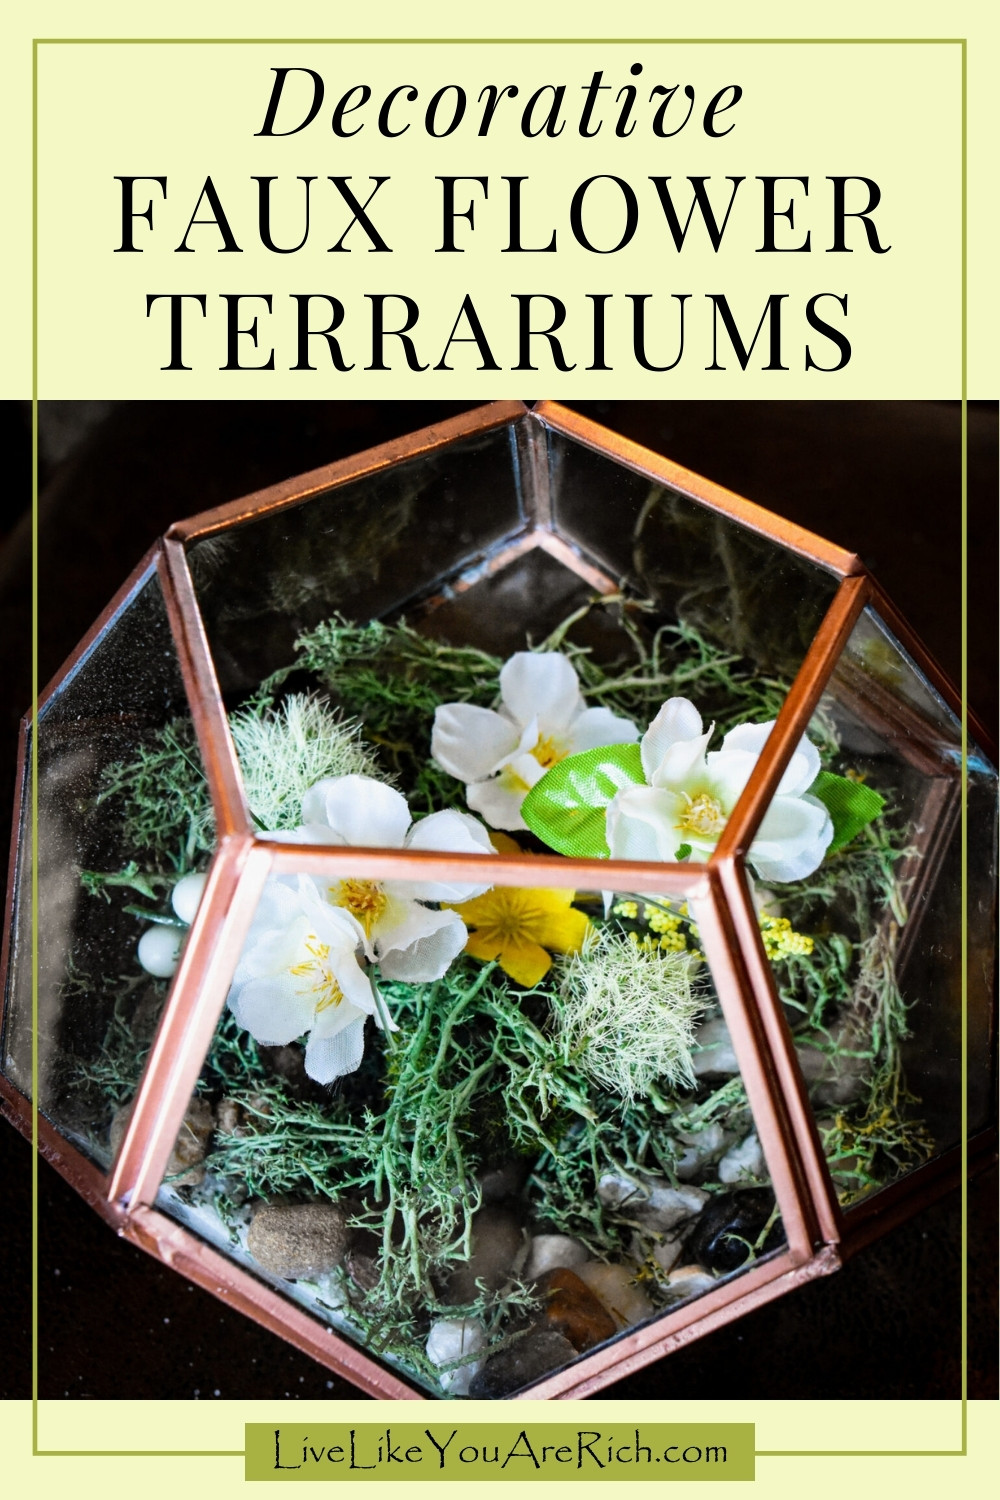 Decorative Faux Flower Terrariums. Using sand, rocks and faux moss and faux floral sprigs, flowers, etc. you can make an interesting faux floral arrangement for a glass geometric terrarium. 